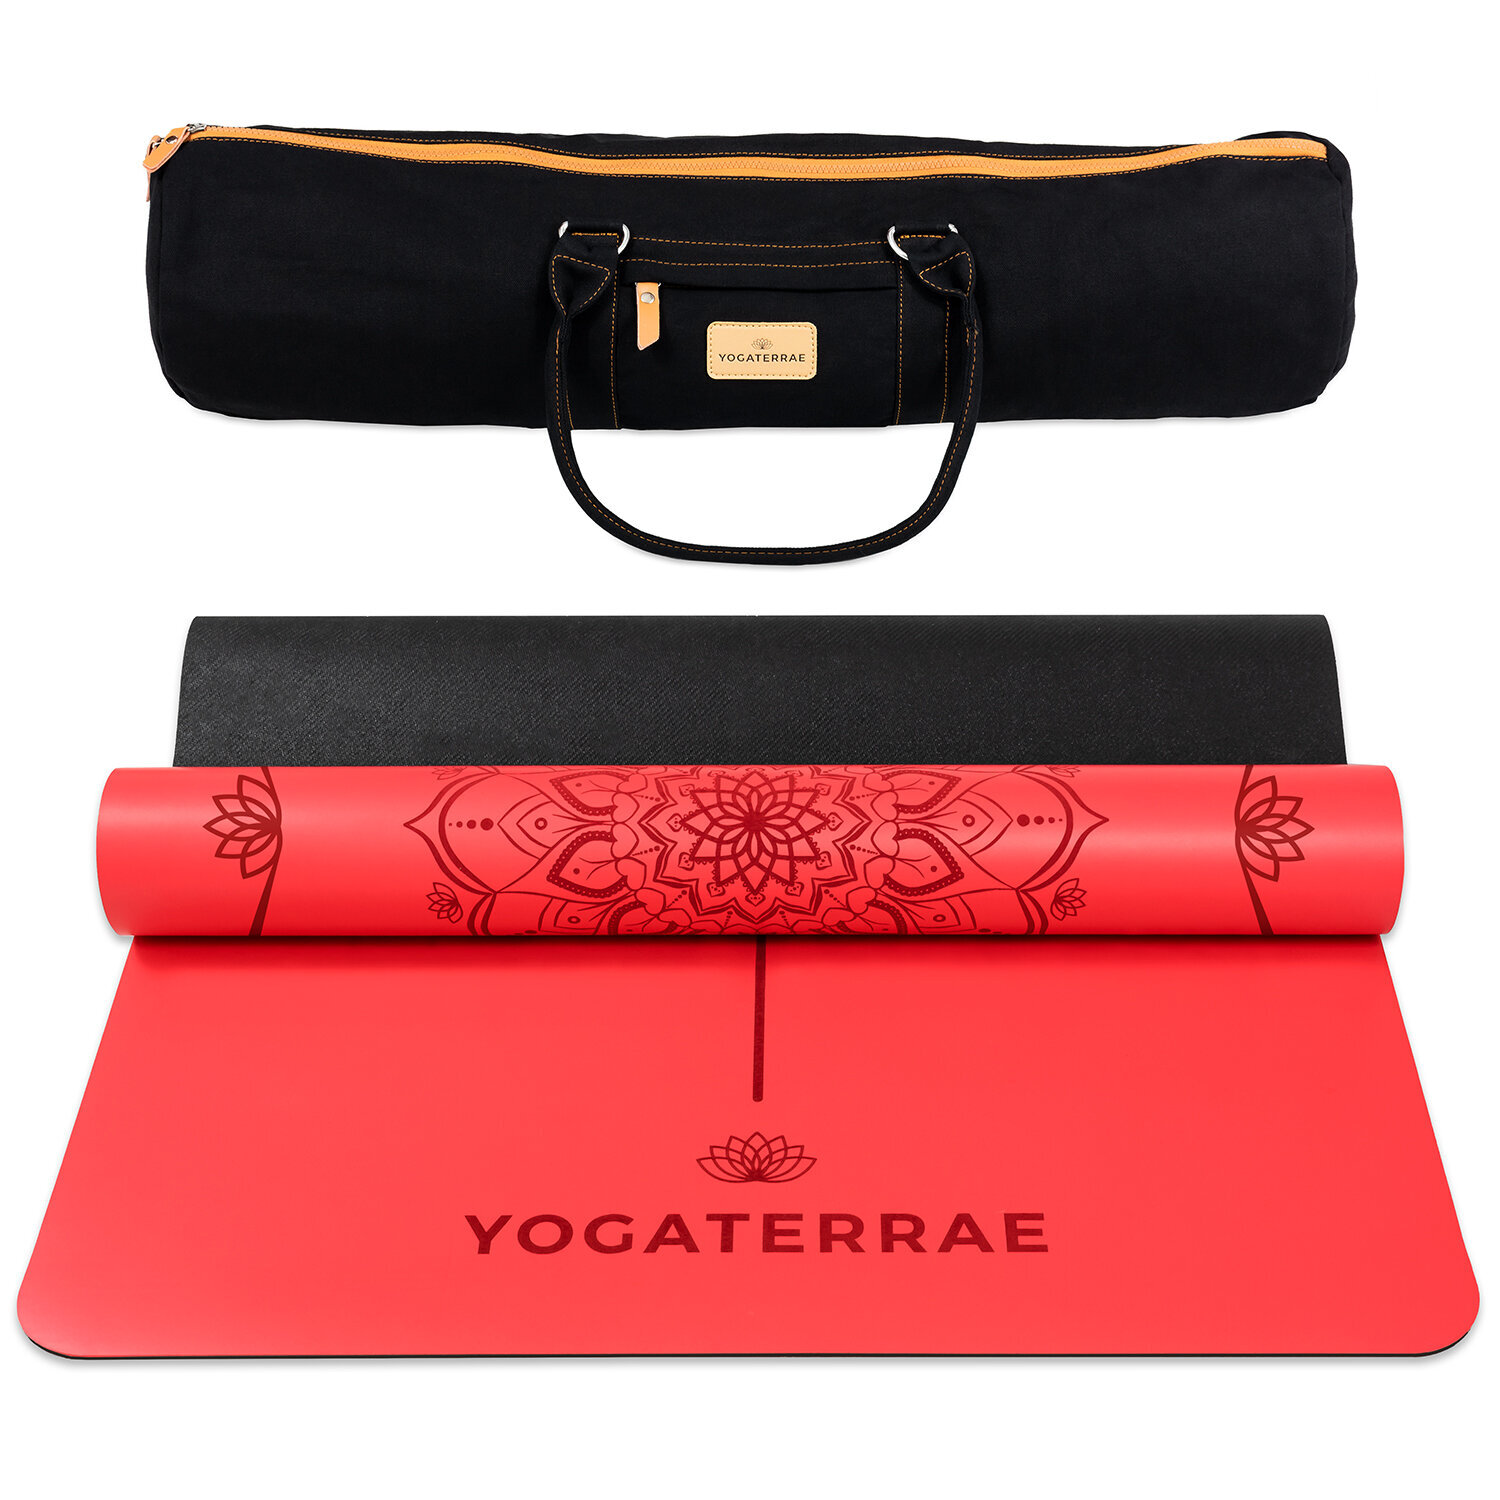 Tapis de yoga rouge pu-caoutchouc + sac